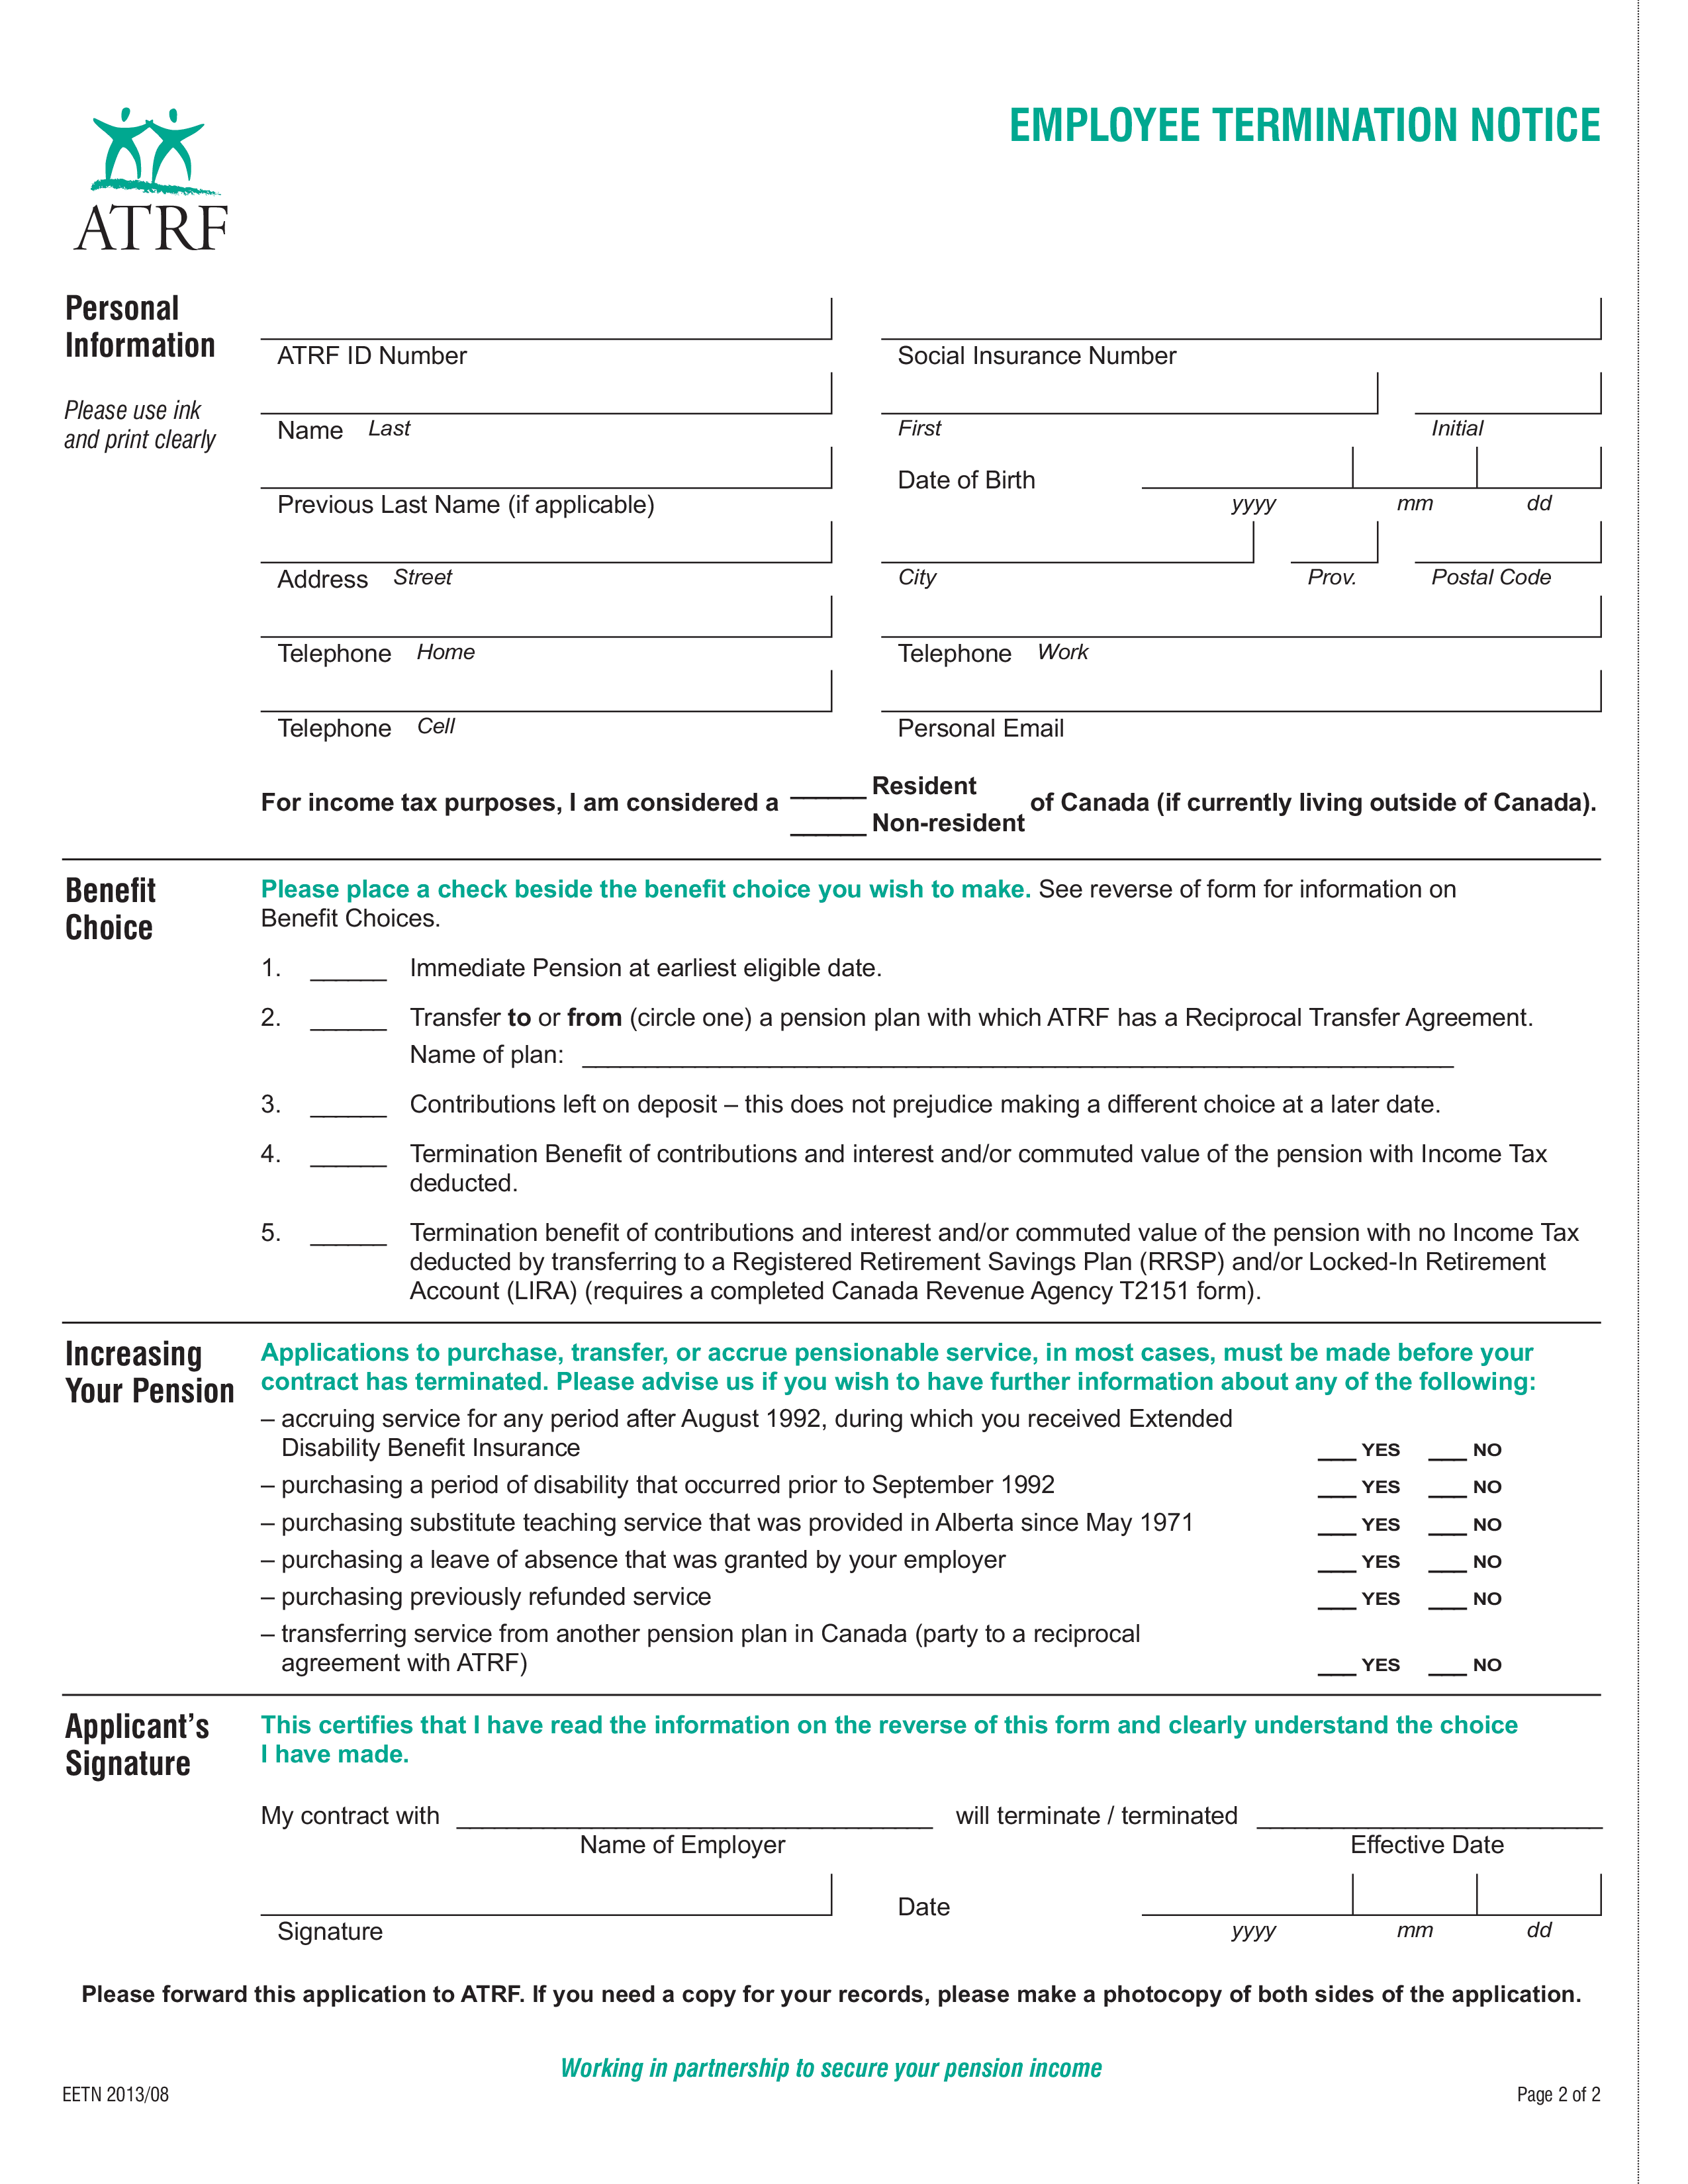 employee termination notice form modèles